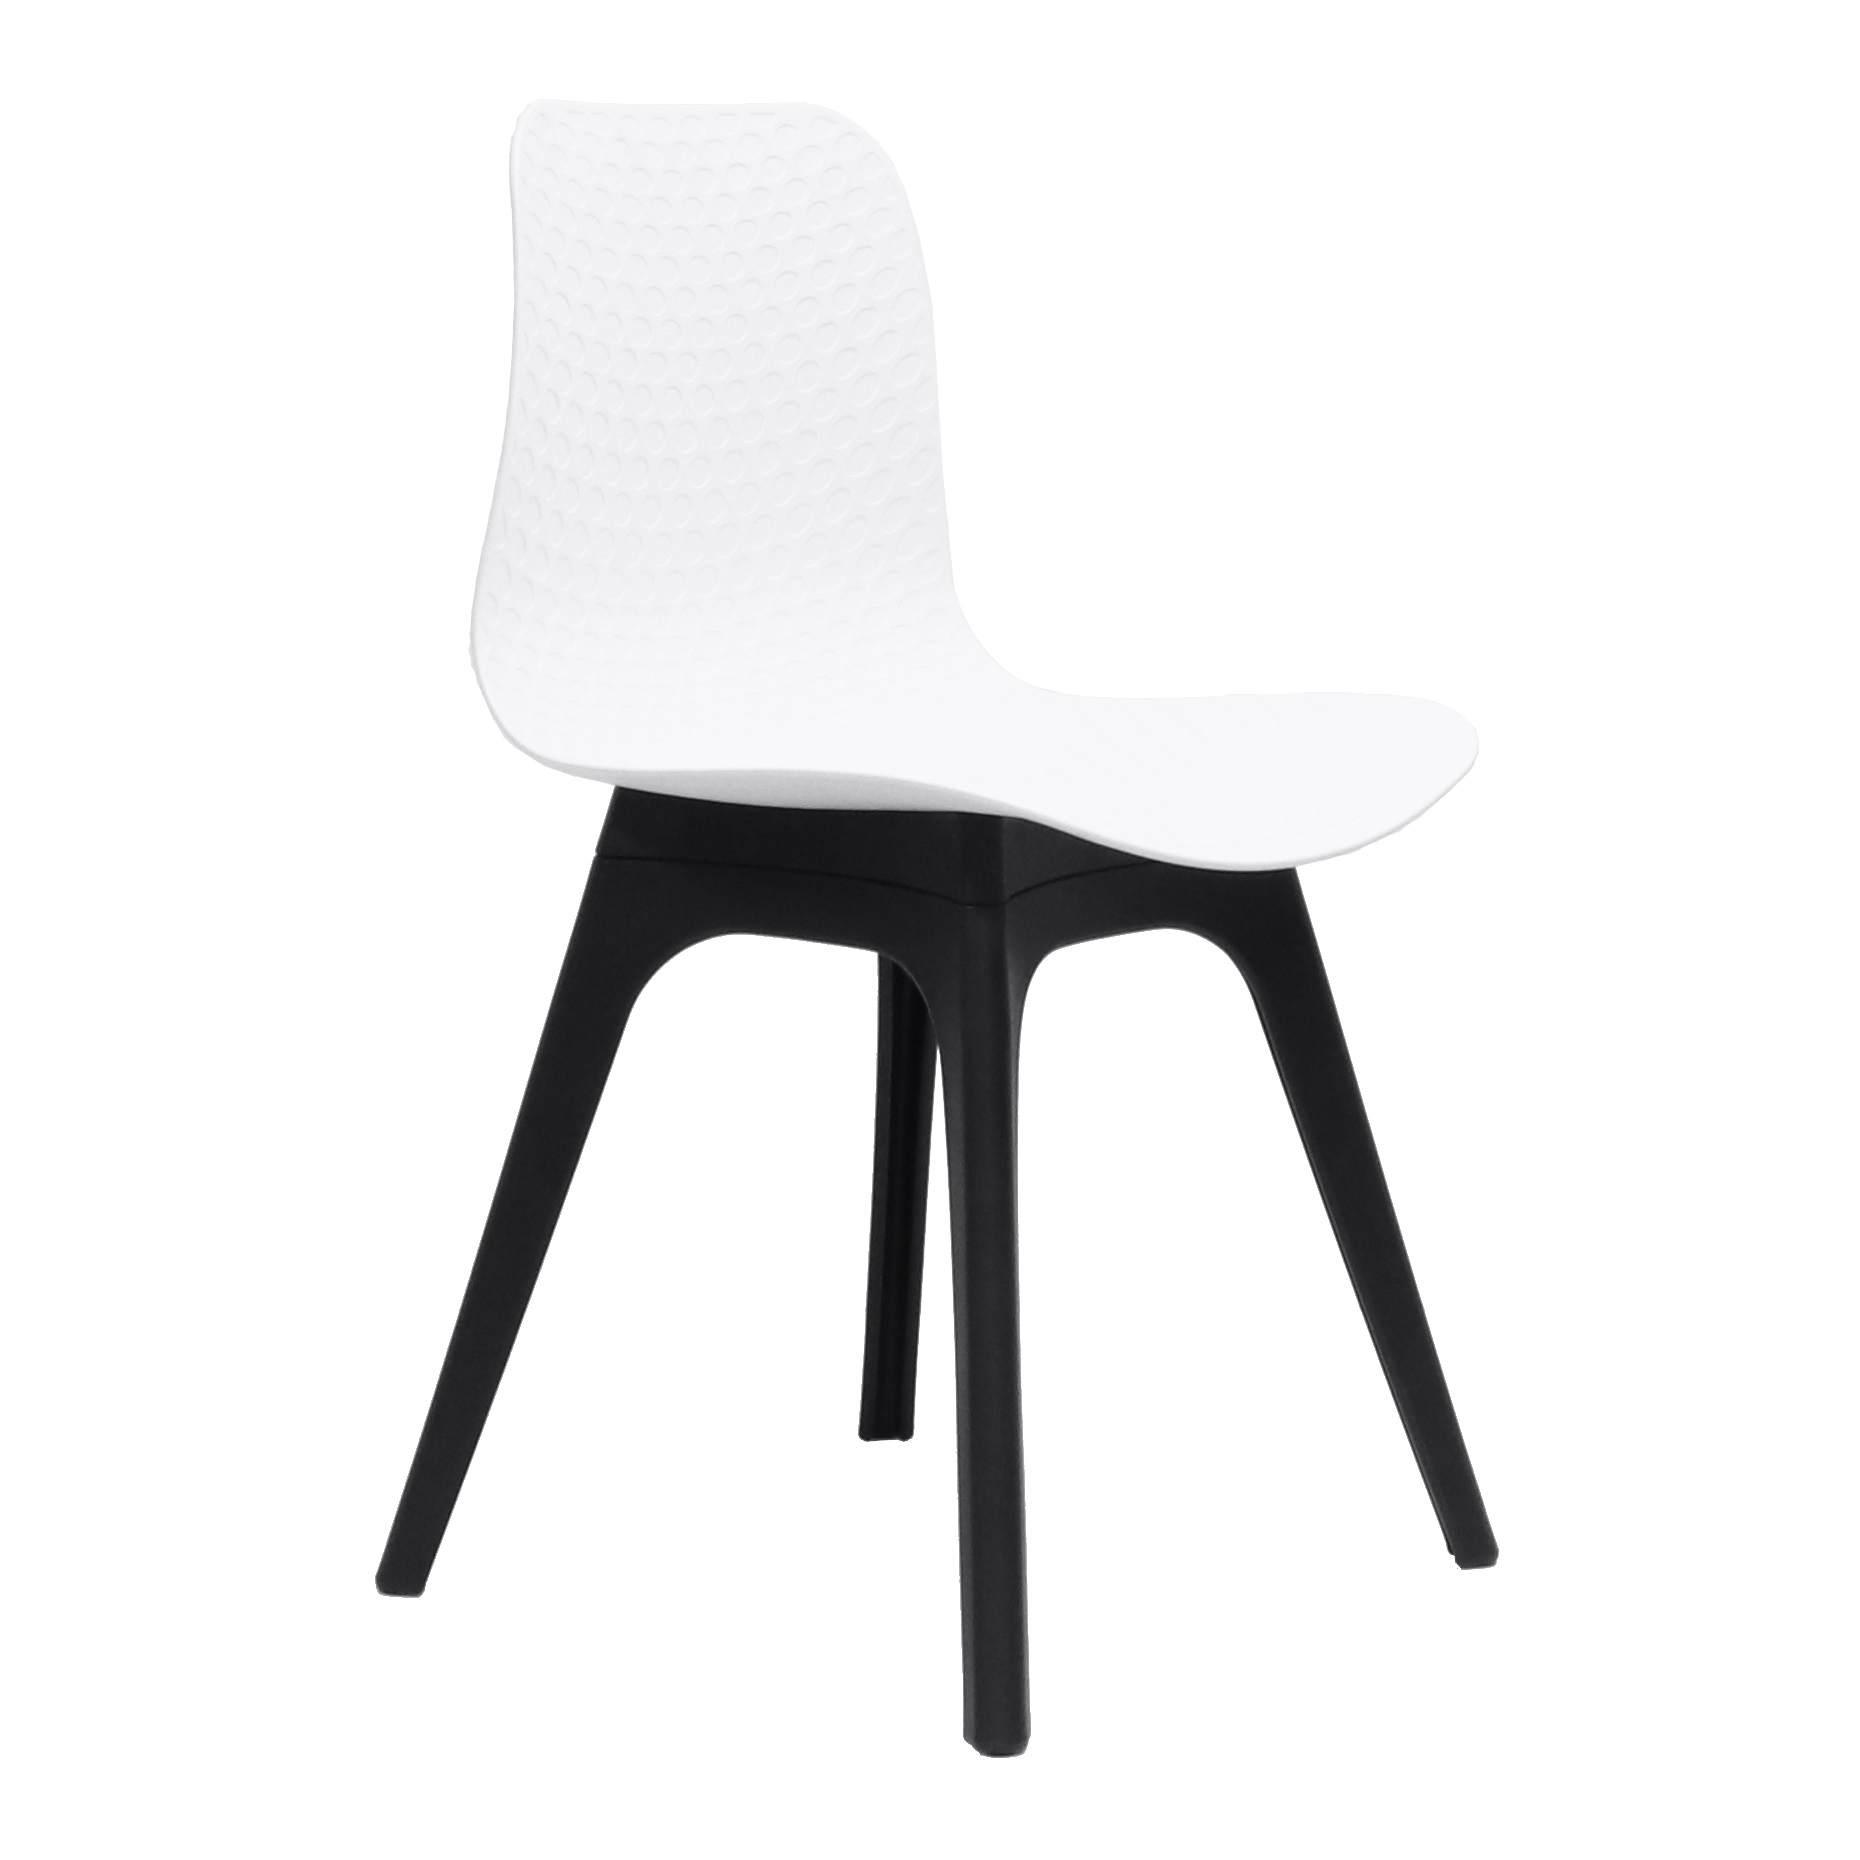 Lucid Chair white on black